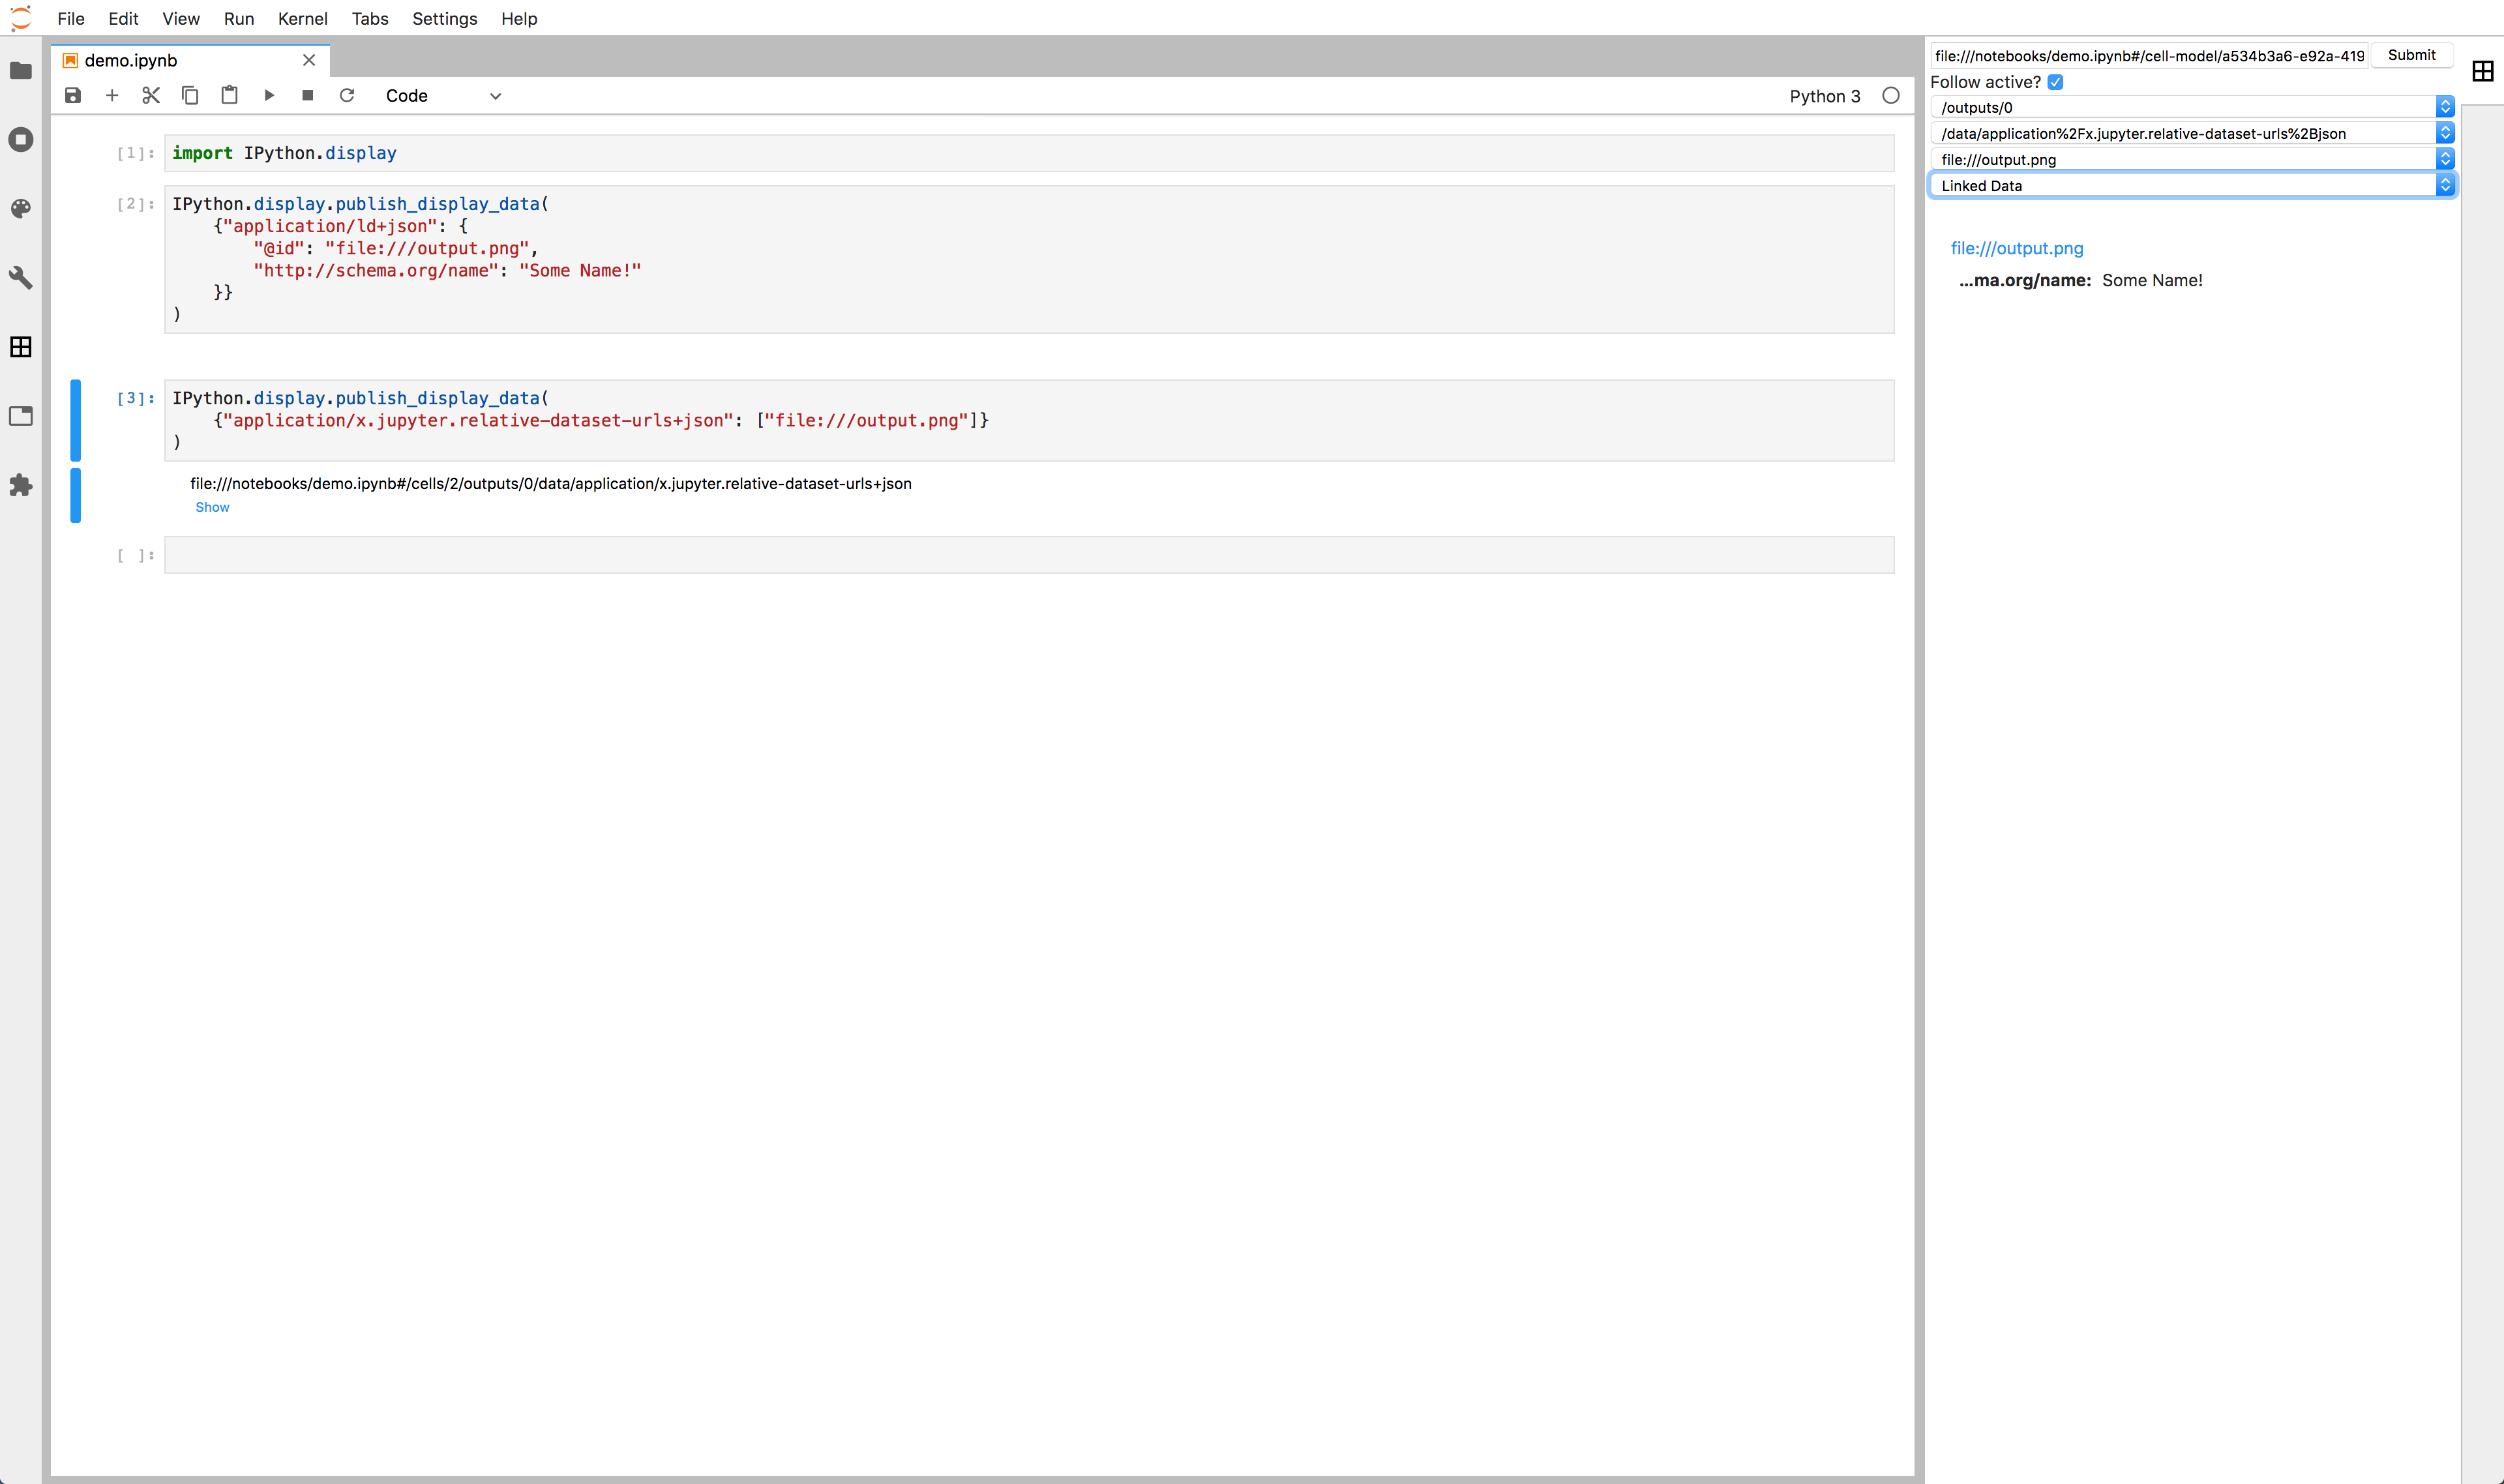 screenshot of JupyterLab metadata creation